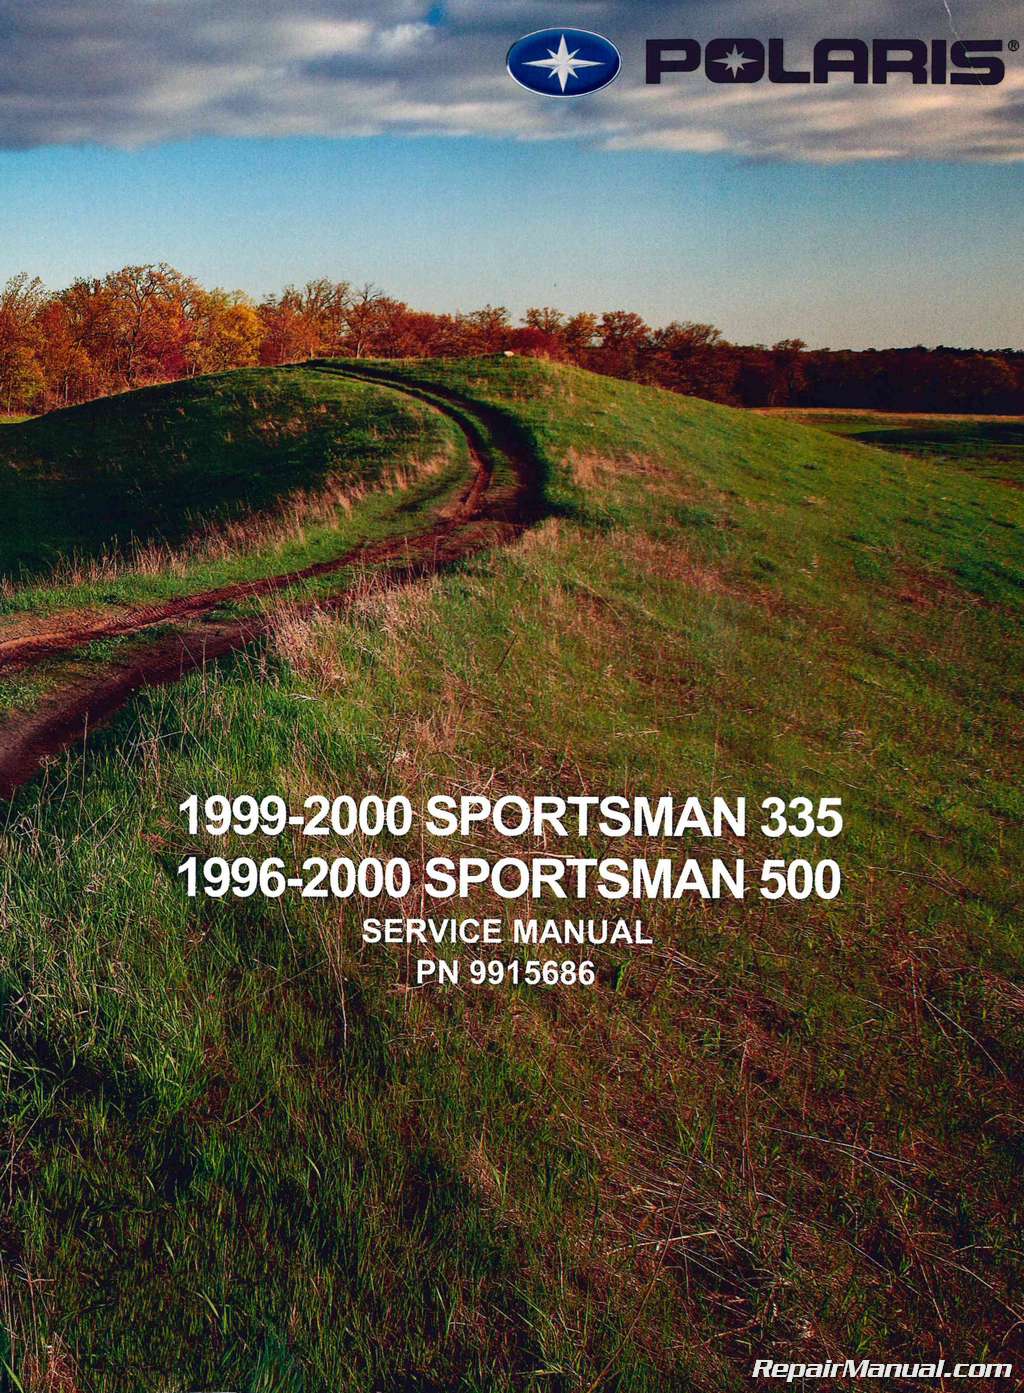 service manual for 2007 polaris sportsman 500